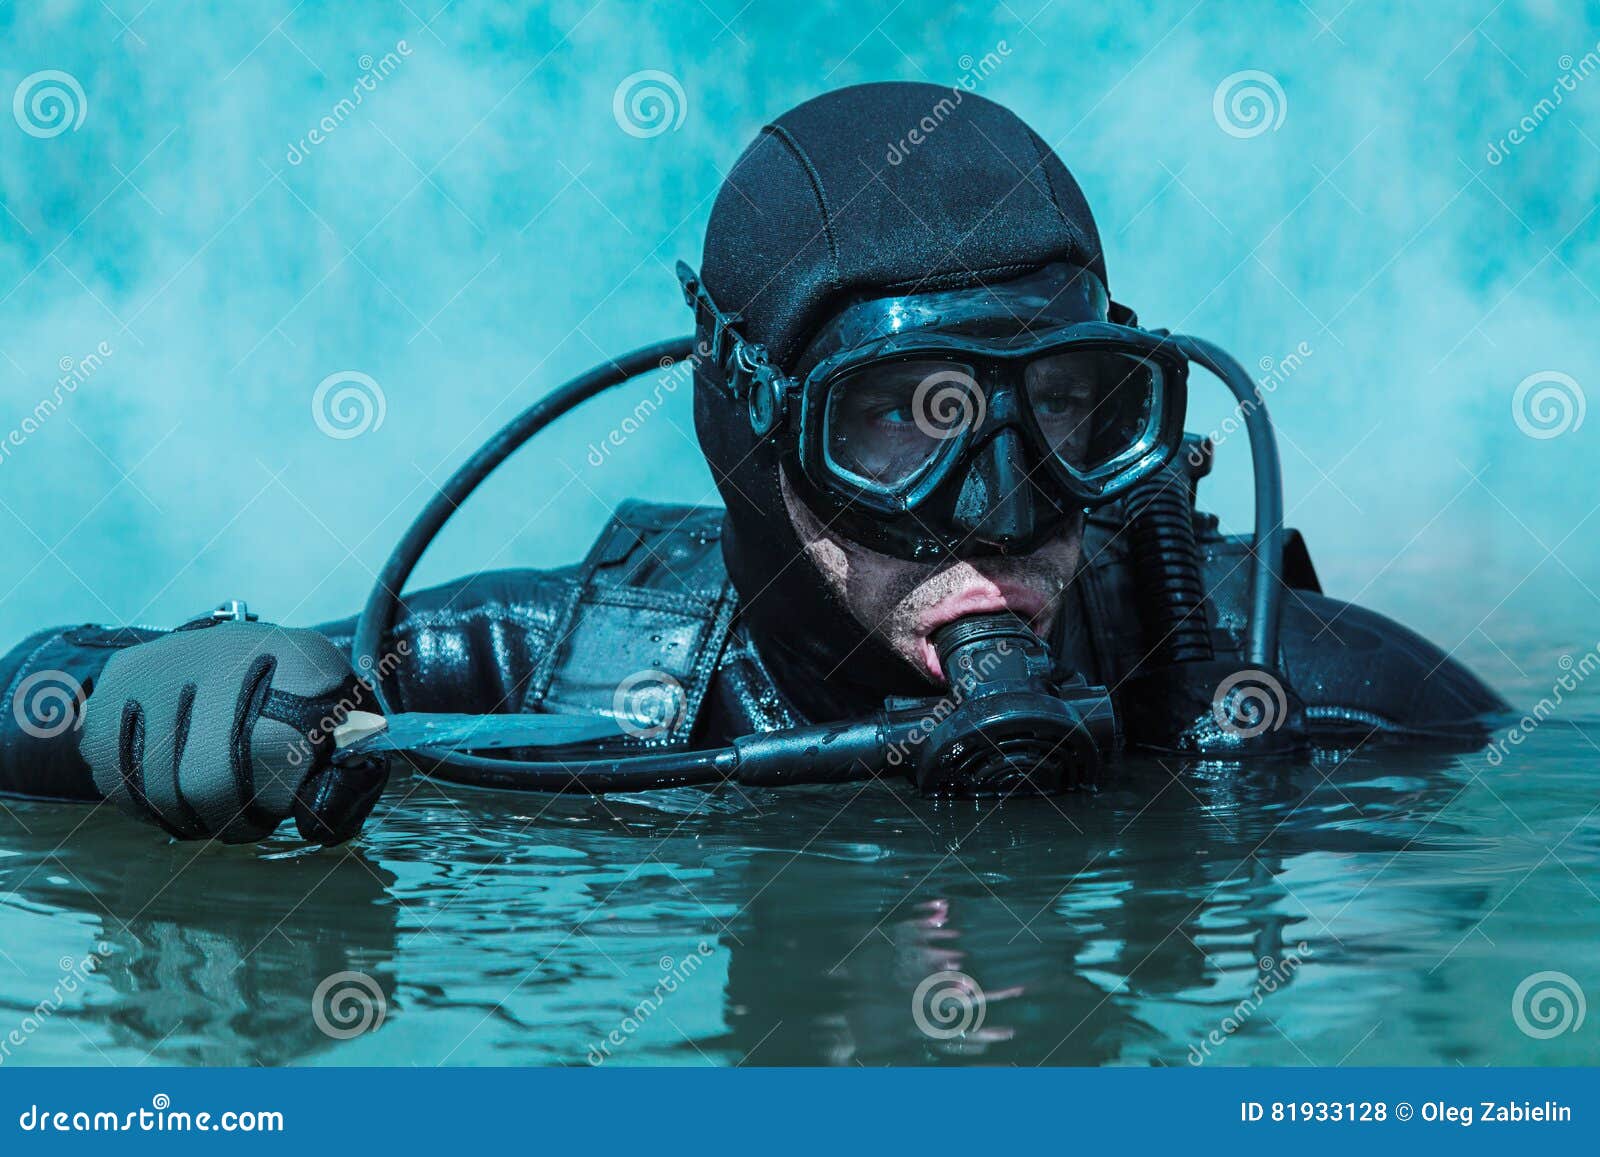 navy seal frogman